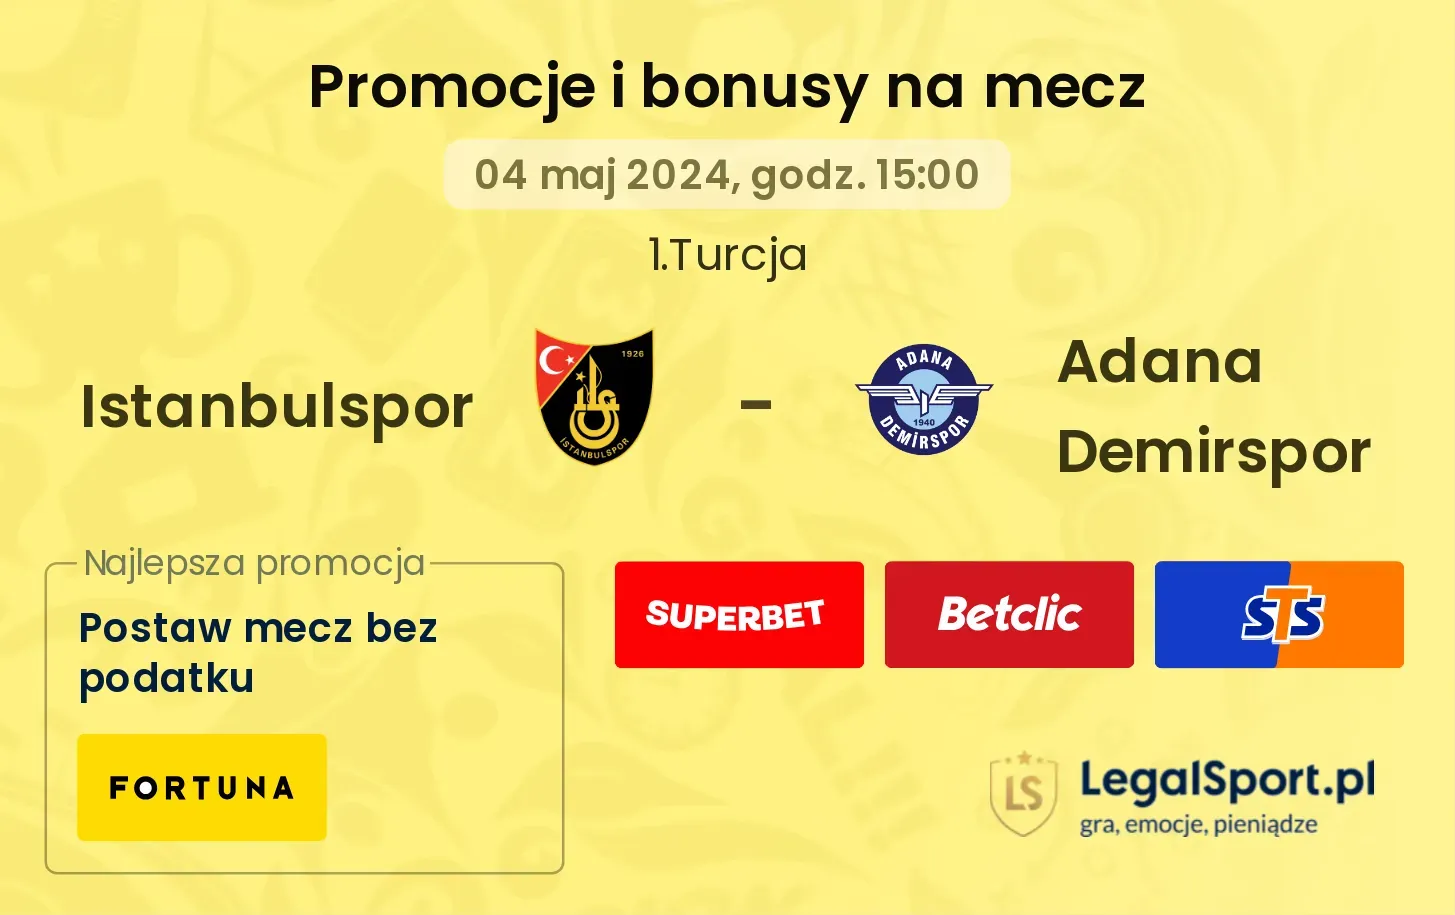 Istanbulspor - Adana Demirspor promocje bonusy na mecz